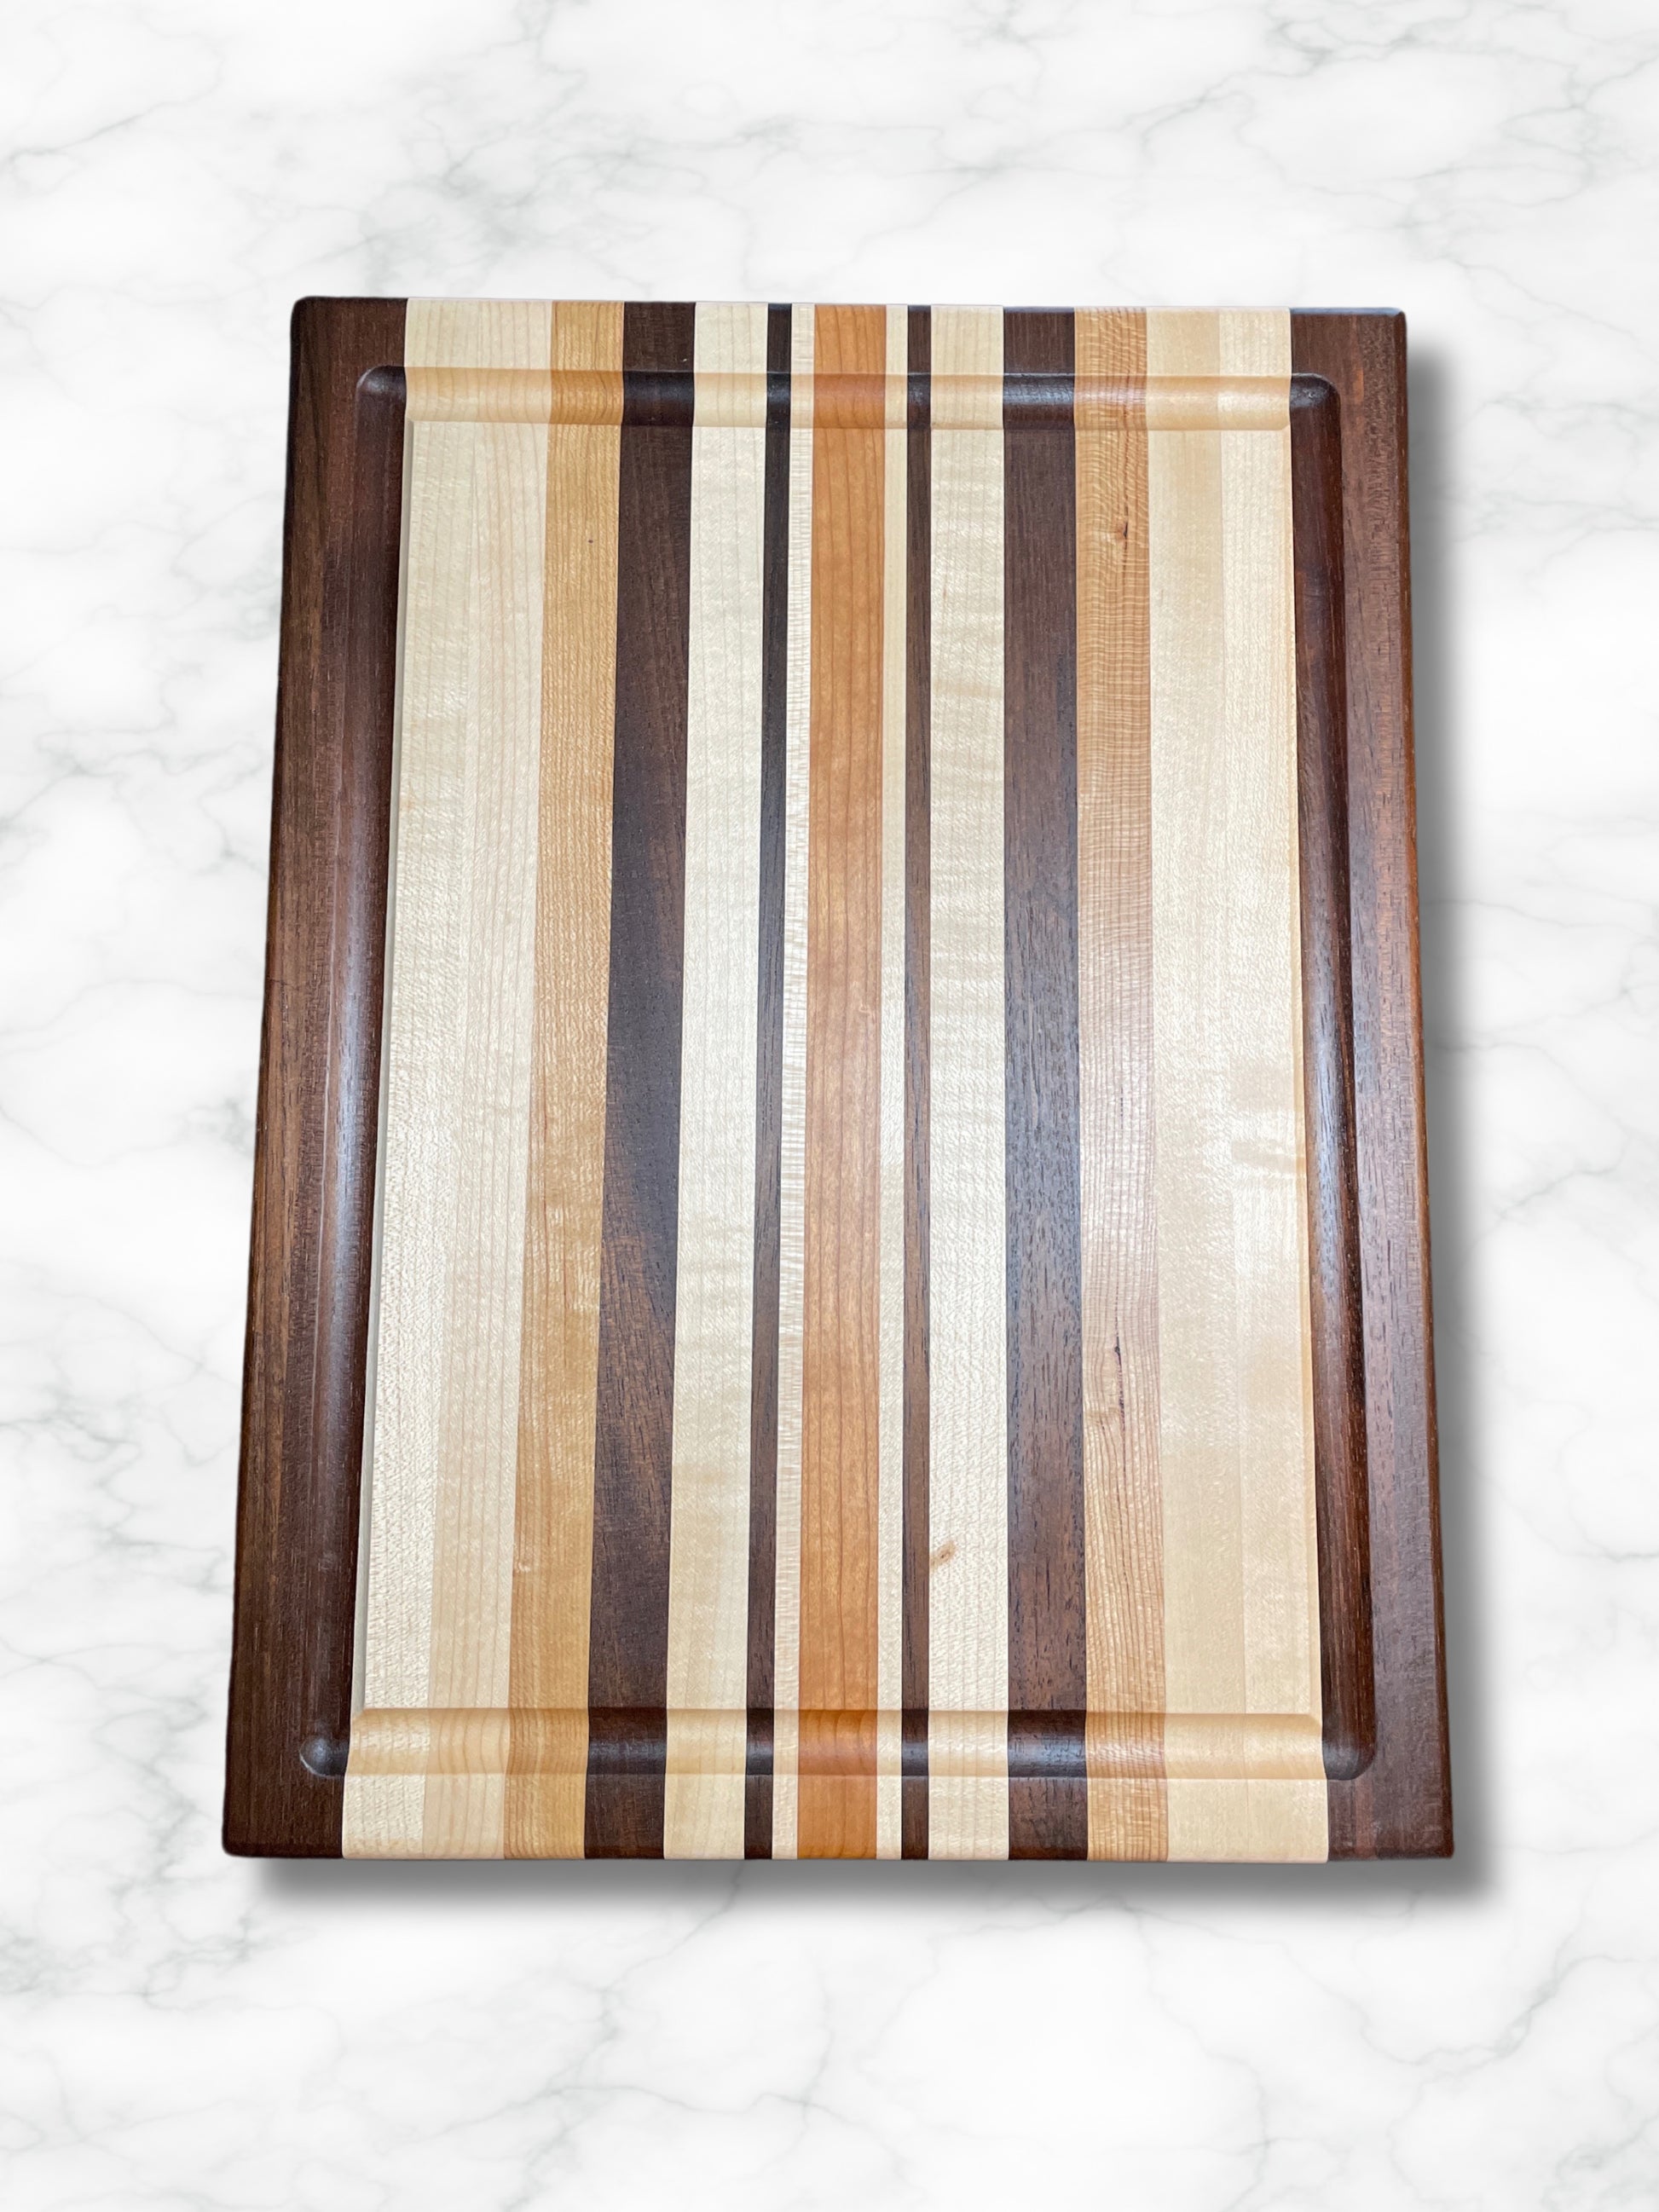 custom handmade edge grain cutting board wood walnut maple cherry, top view